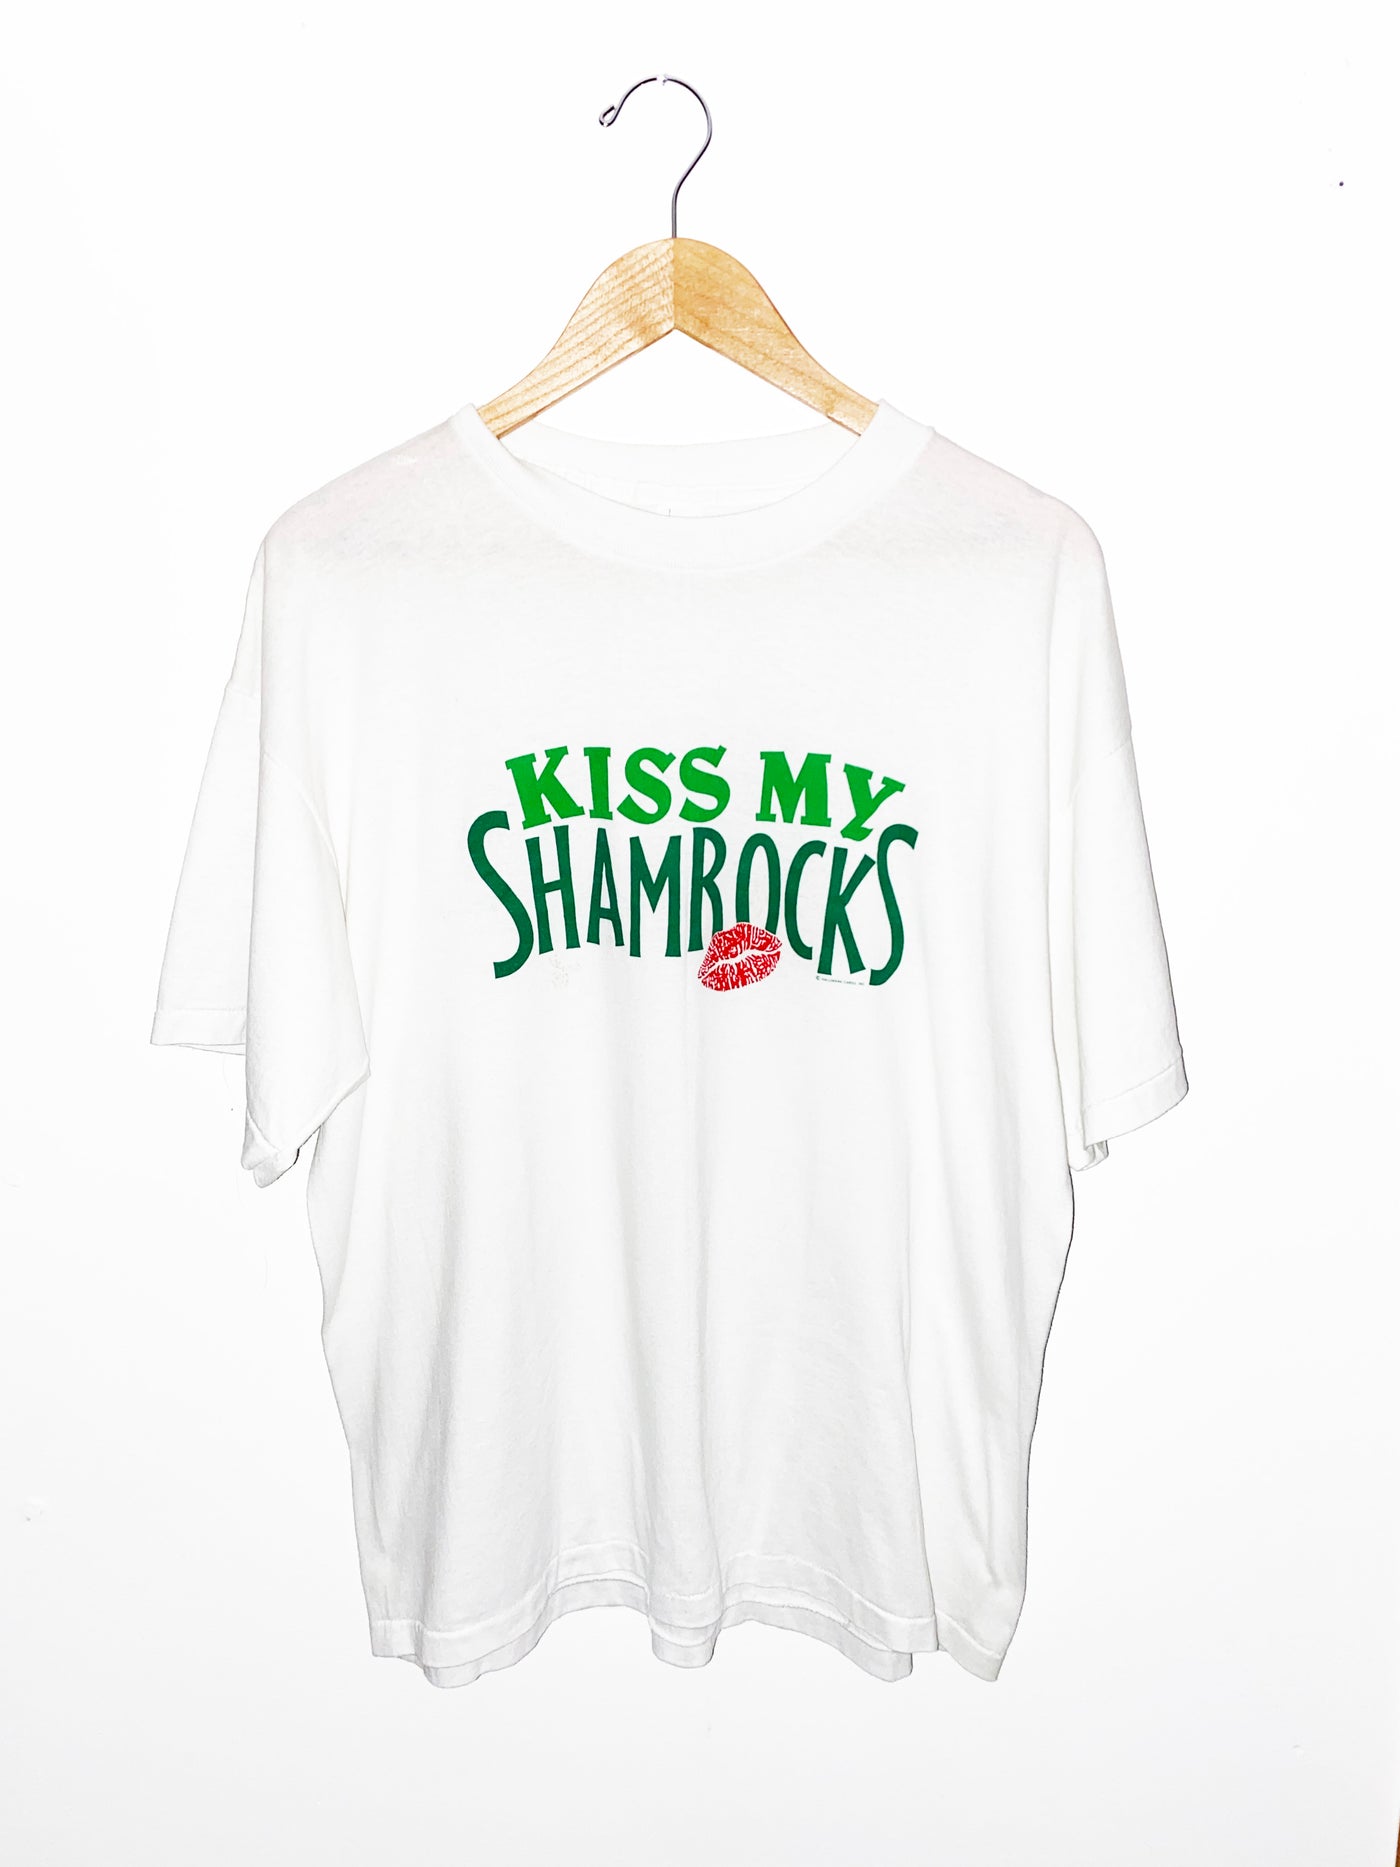 Vintage 1989 Hallmark “Kiss my Shamrocks” Promo Shirt